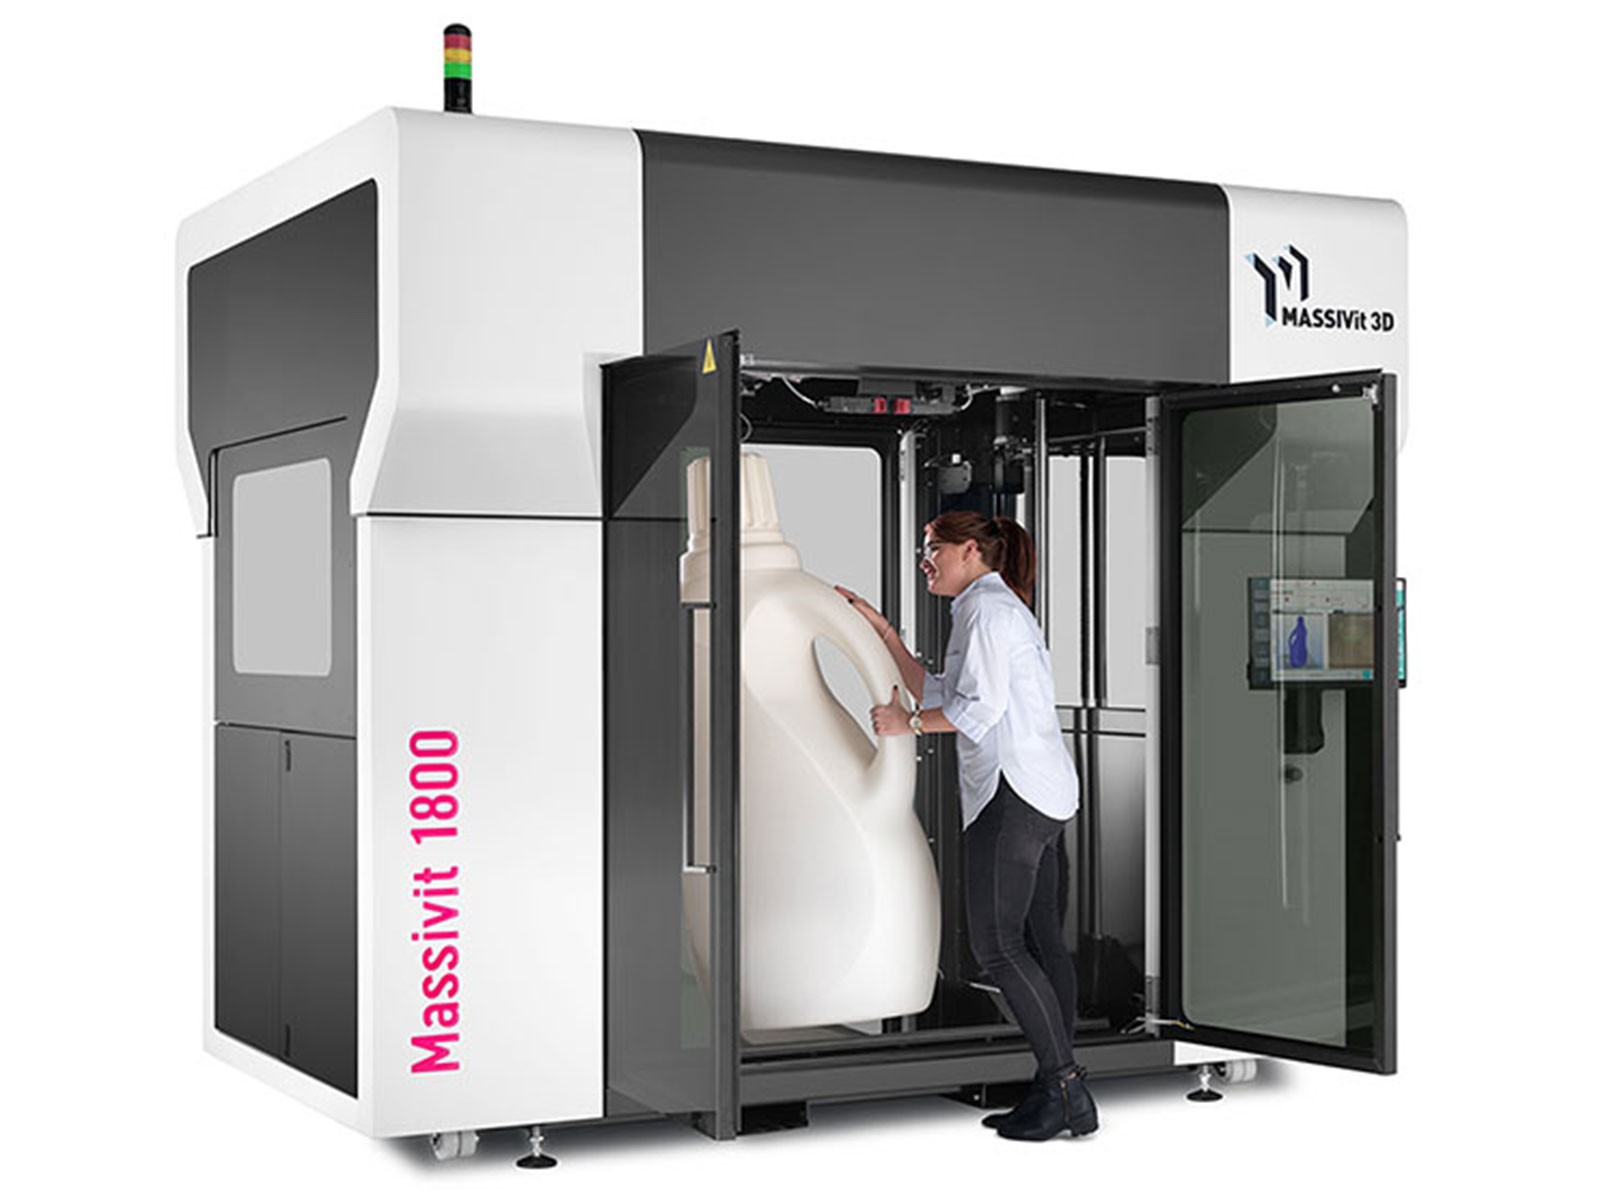 Massivit 1800 large-format 3D printer